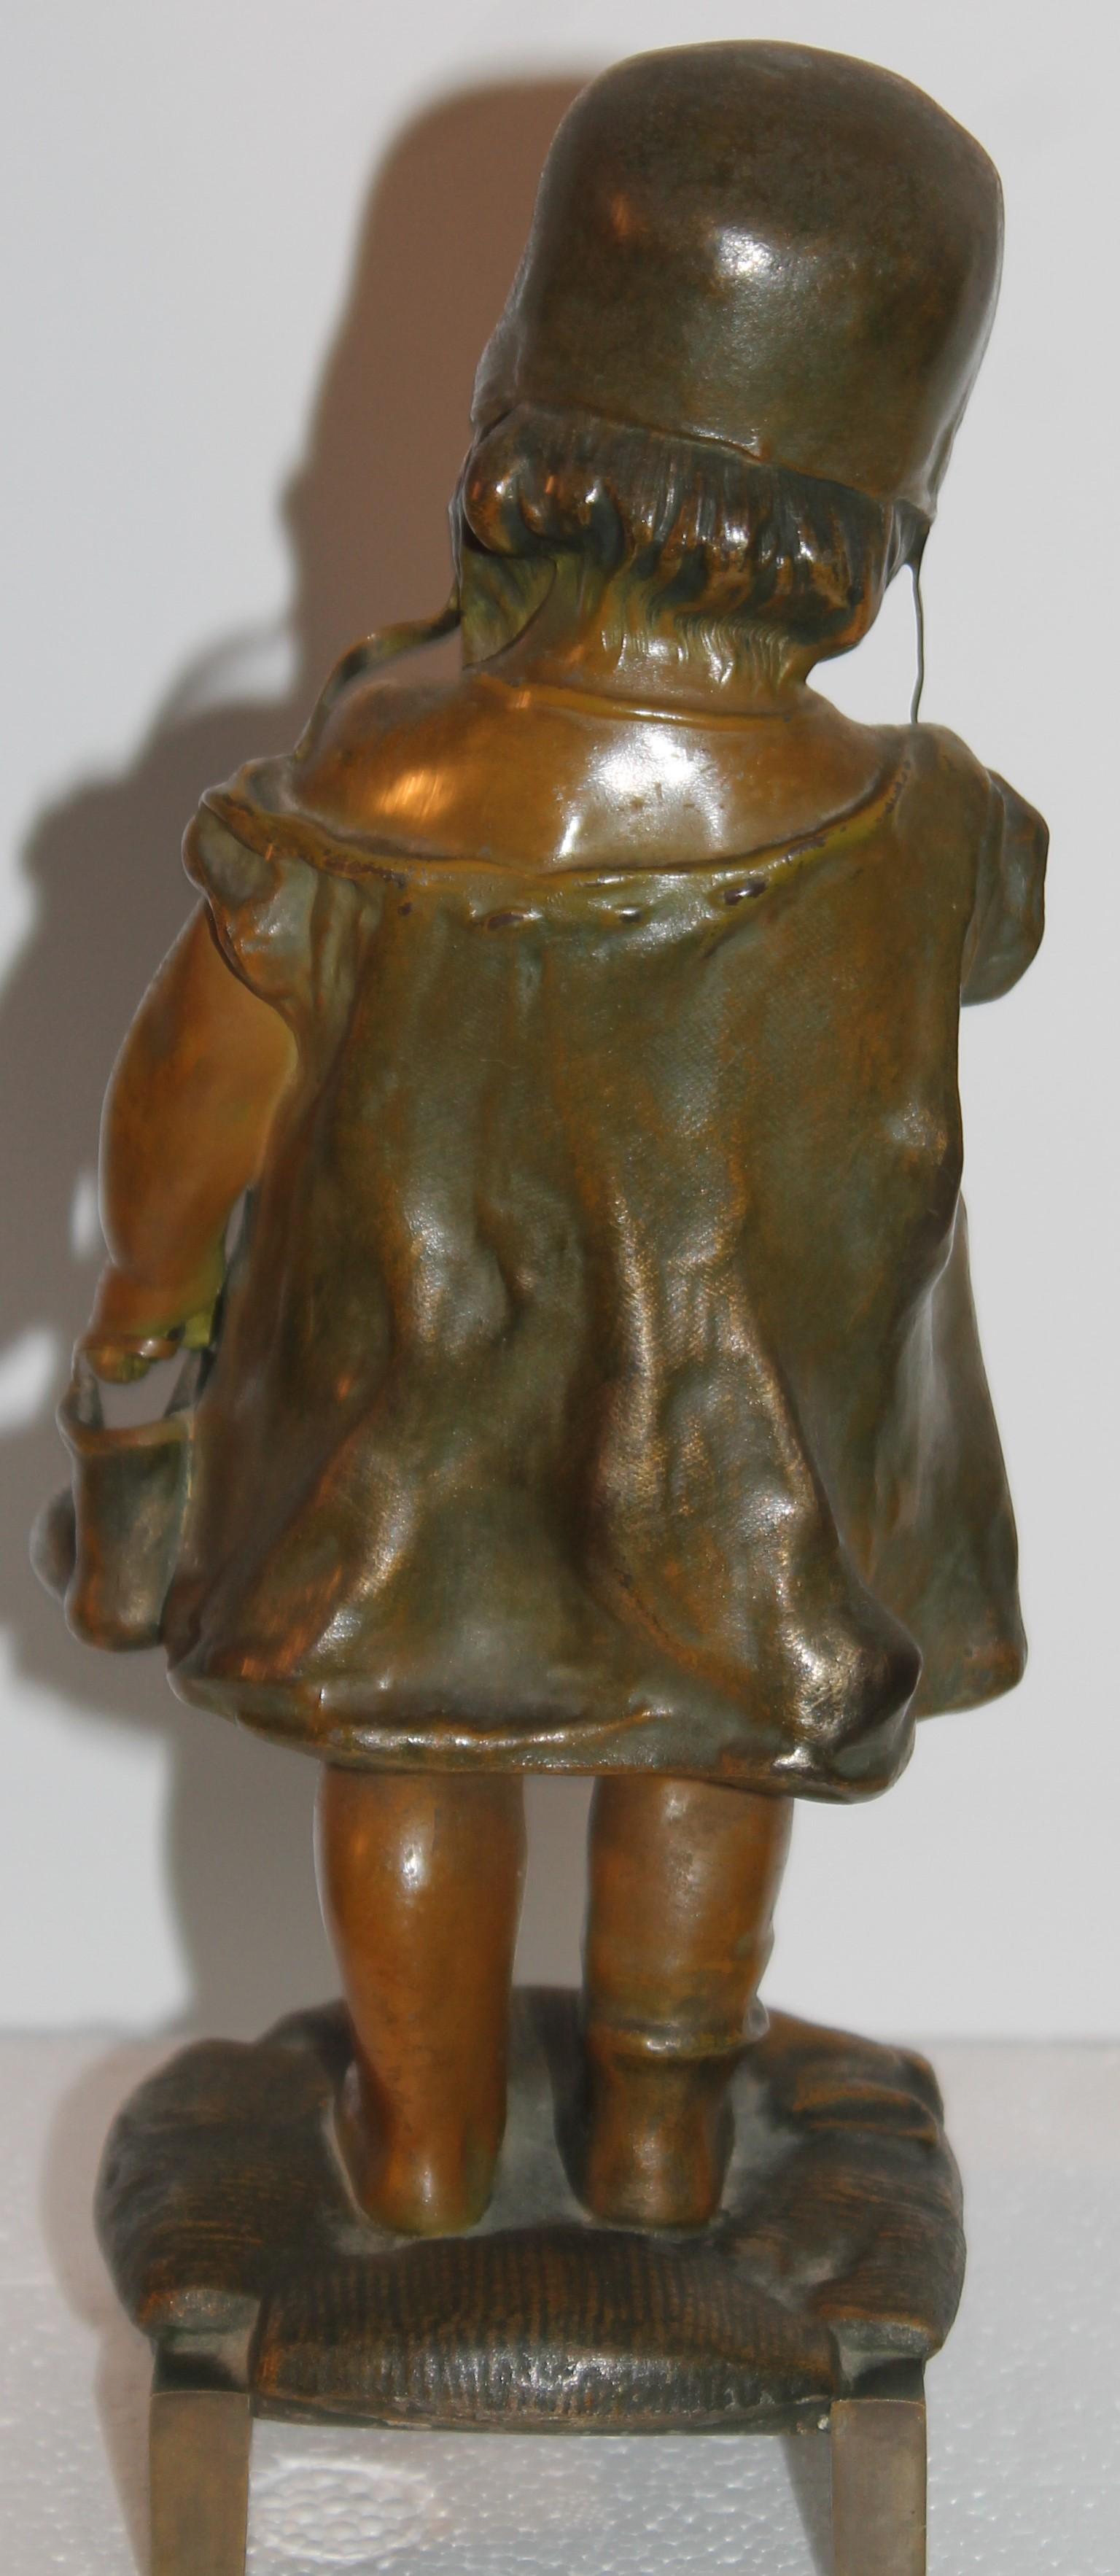 Adirondack Juan Clara Art Noveau Girl on Stool  Bronze Sculpture Holding Shoe in Hand